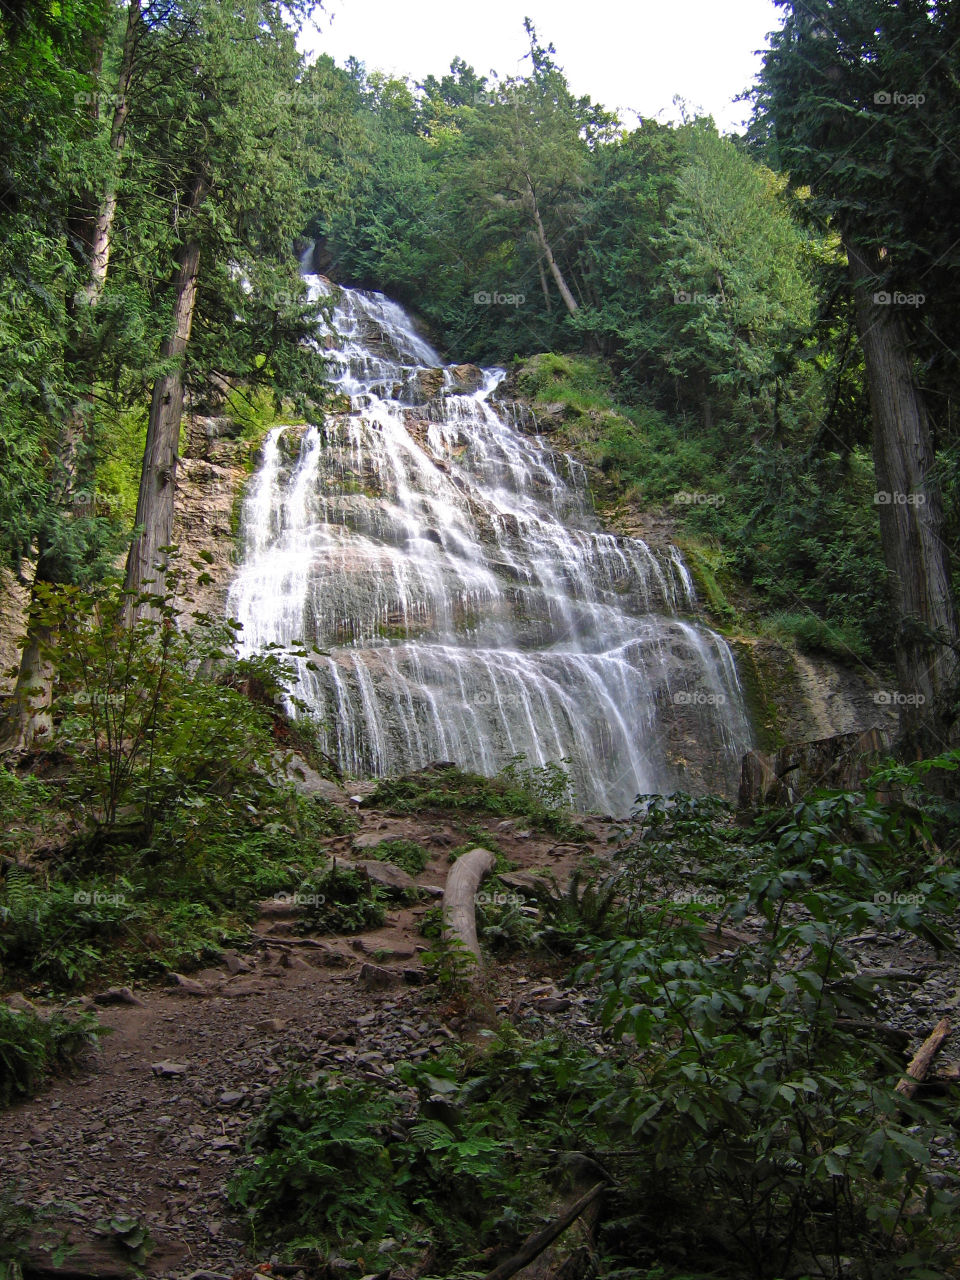 Bridal Falls waterfall in British Columbia, Canada